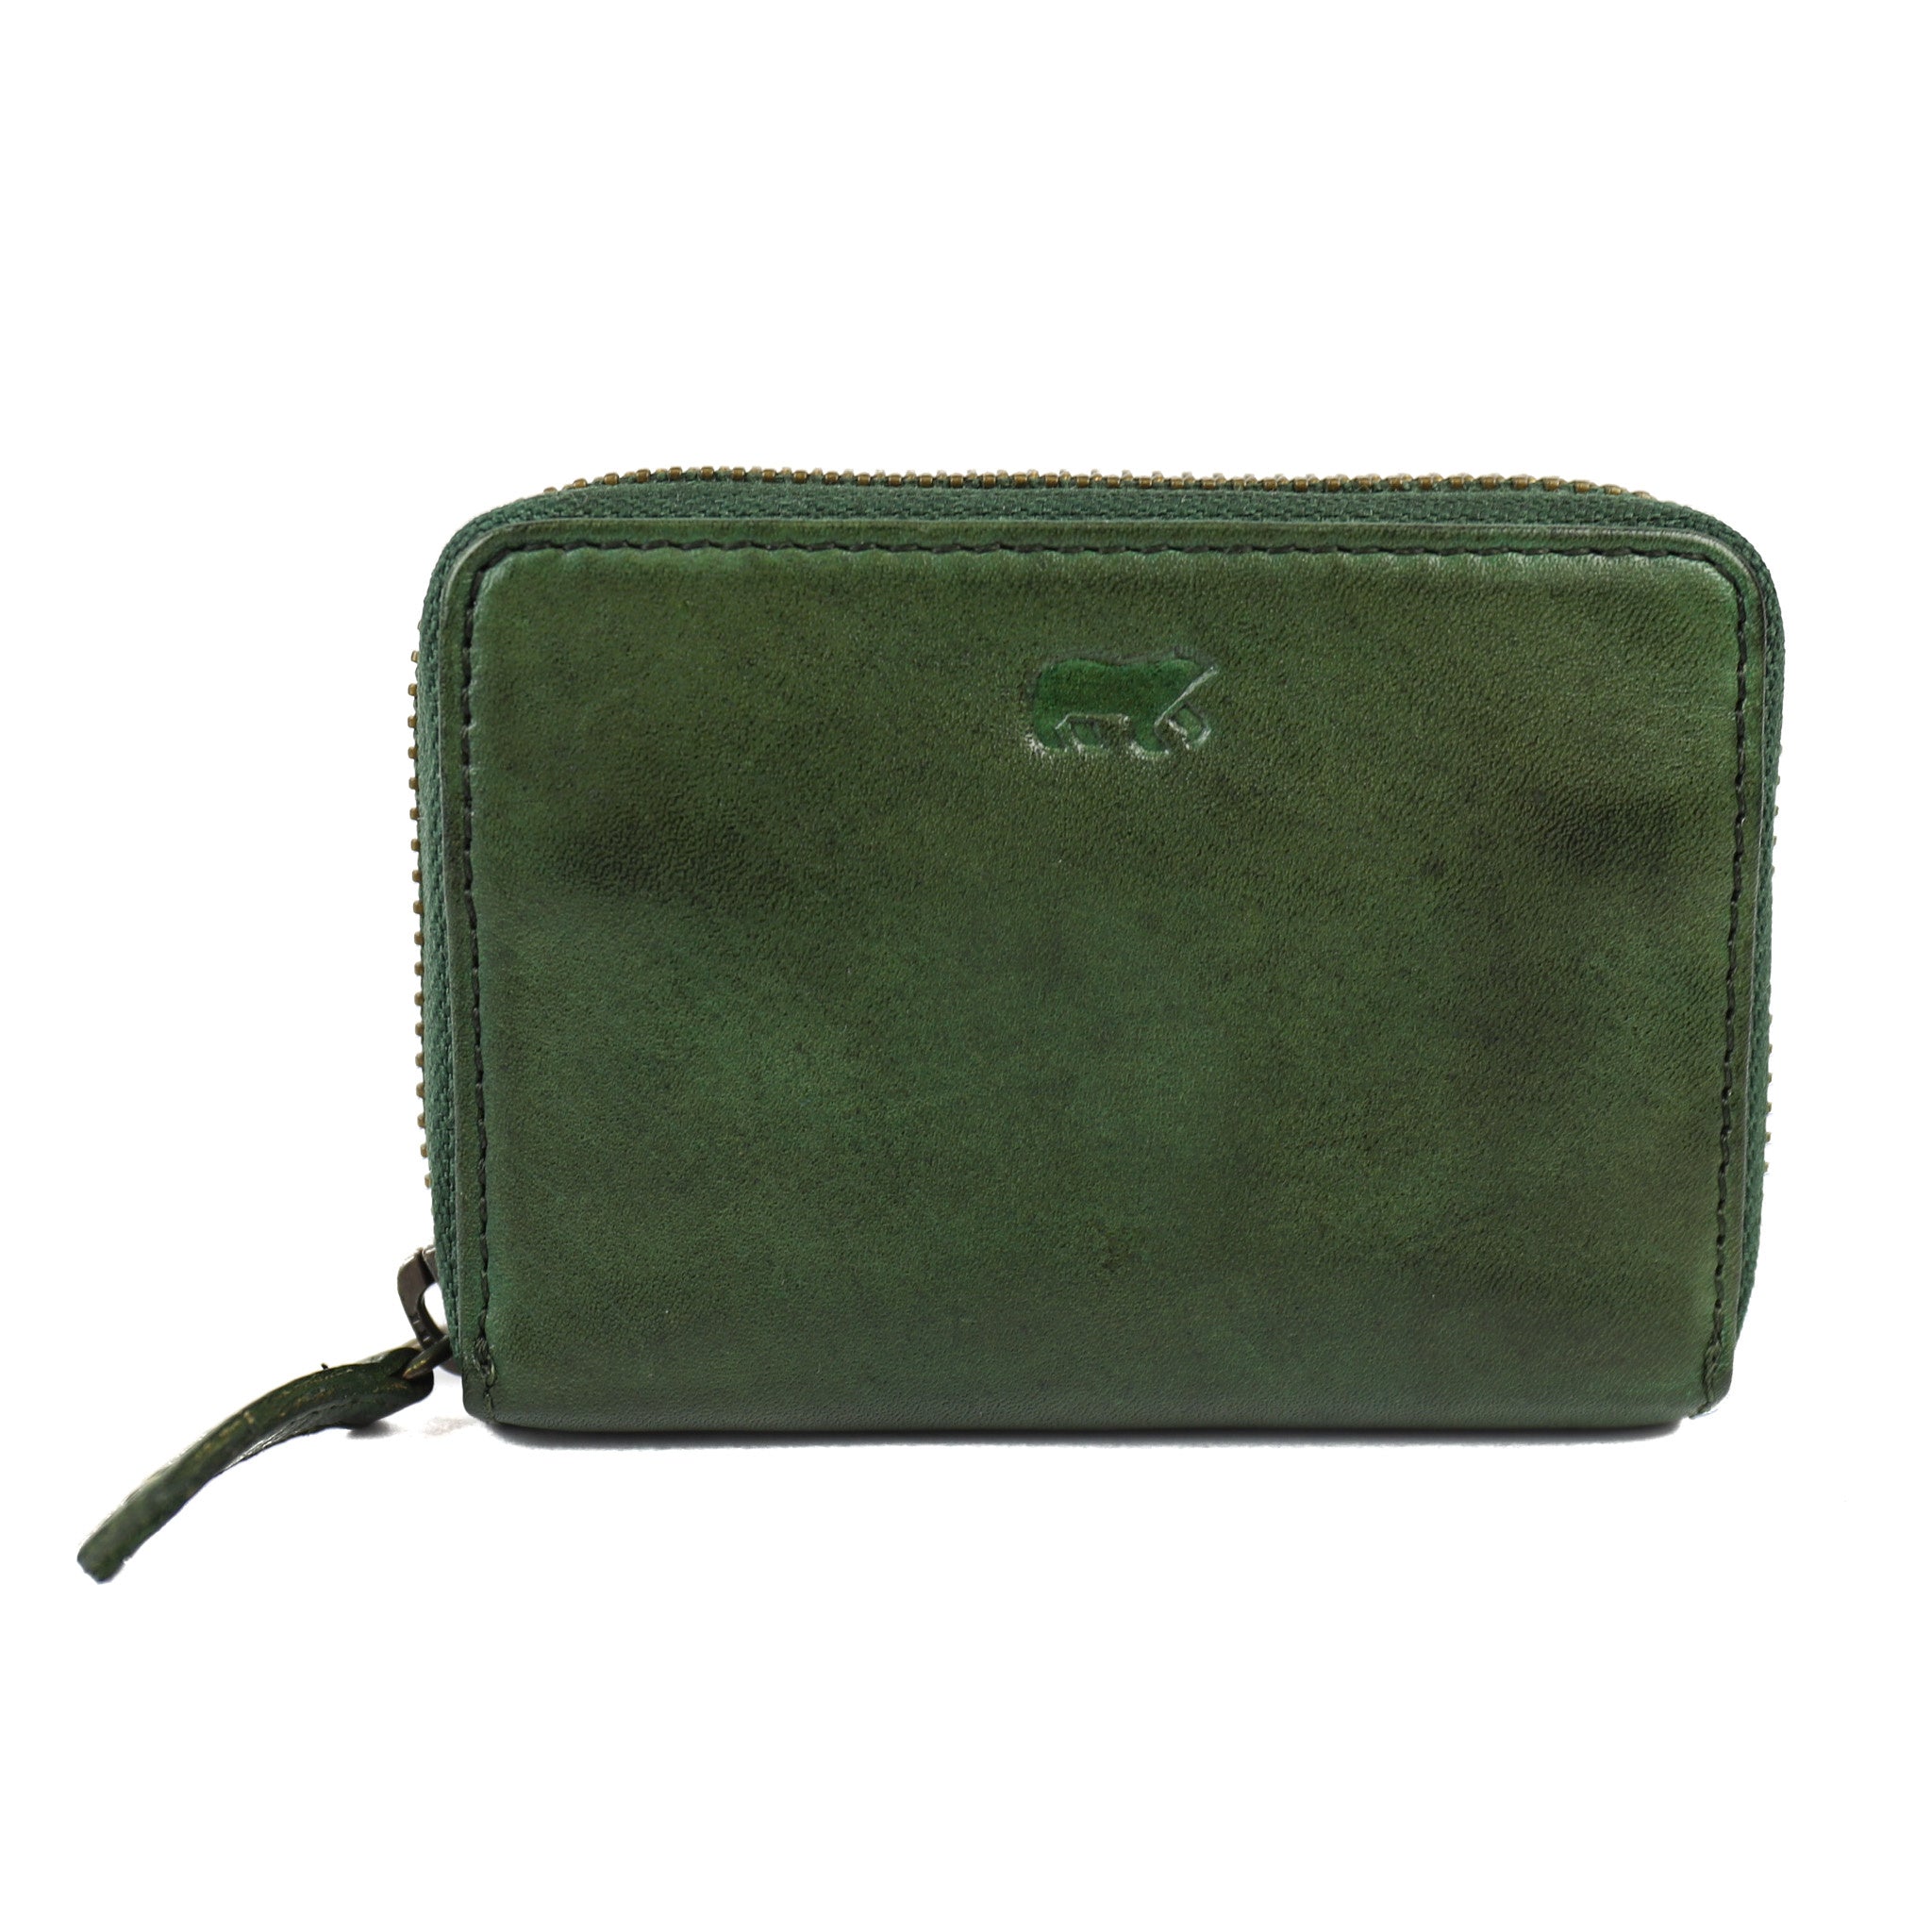 Card holder 'Rudie' green - CL 19408